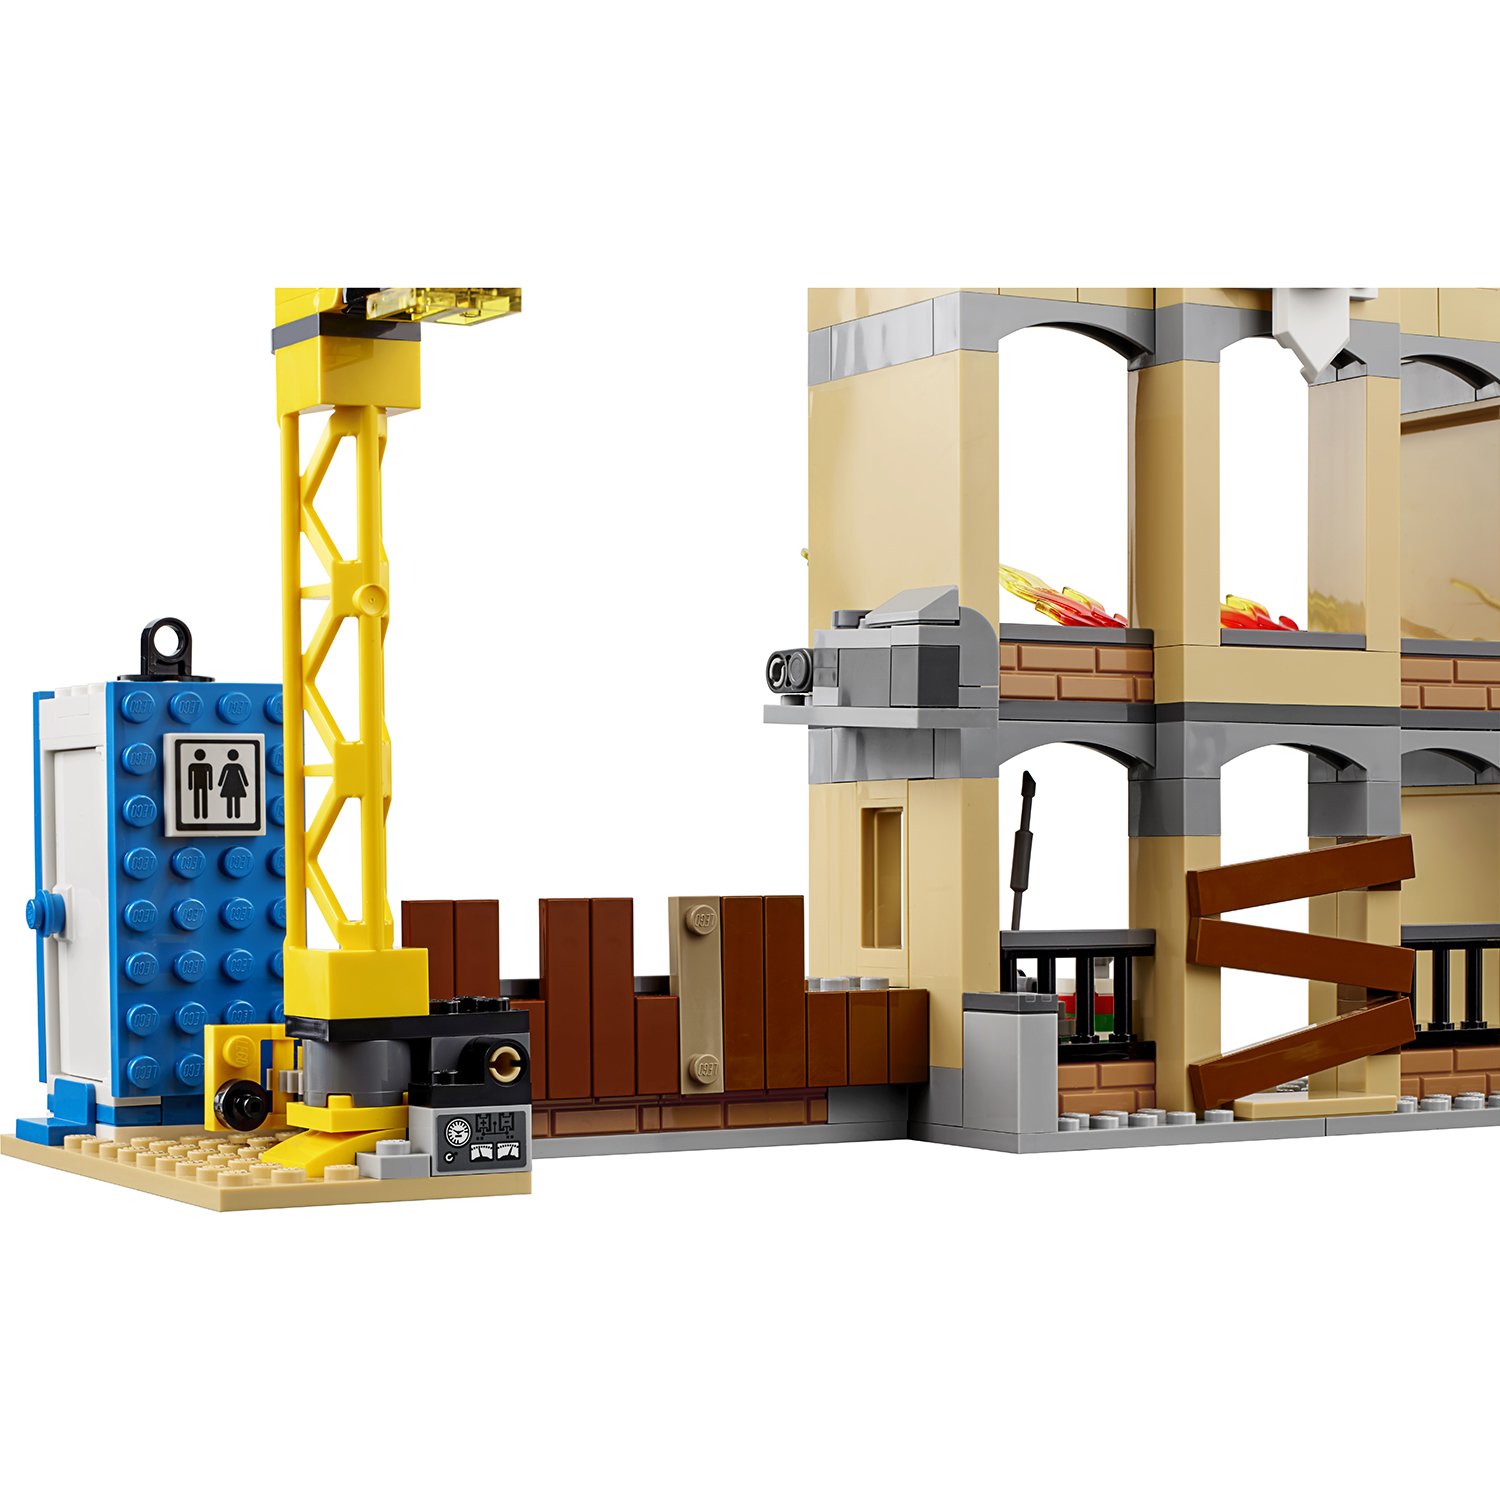 Lego City 60216 Центральная пожарная станция